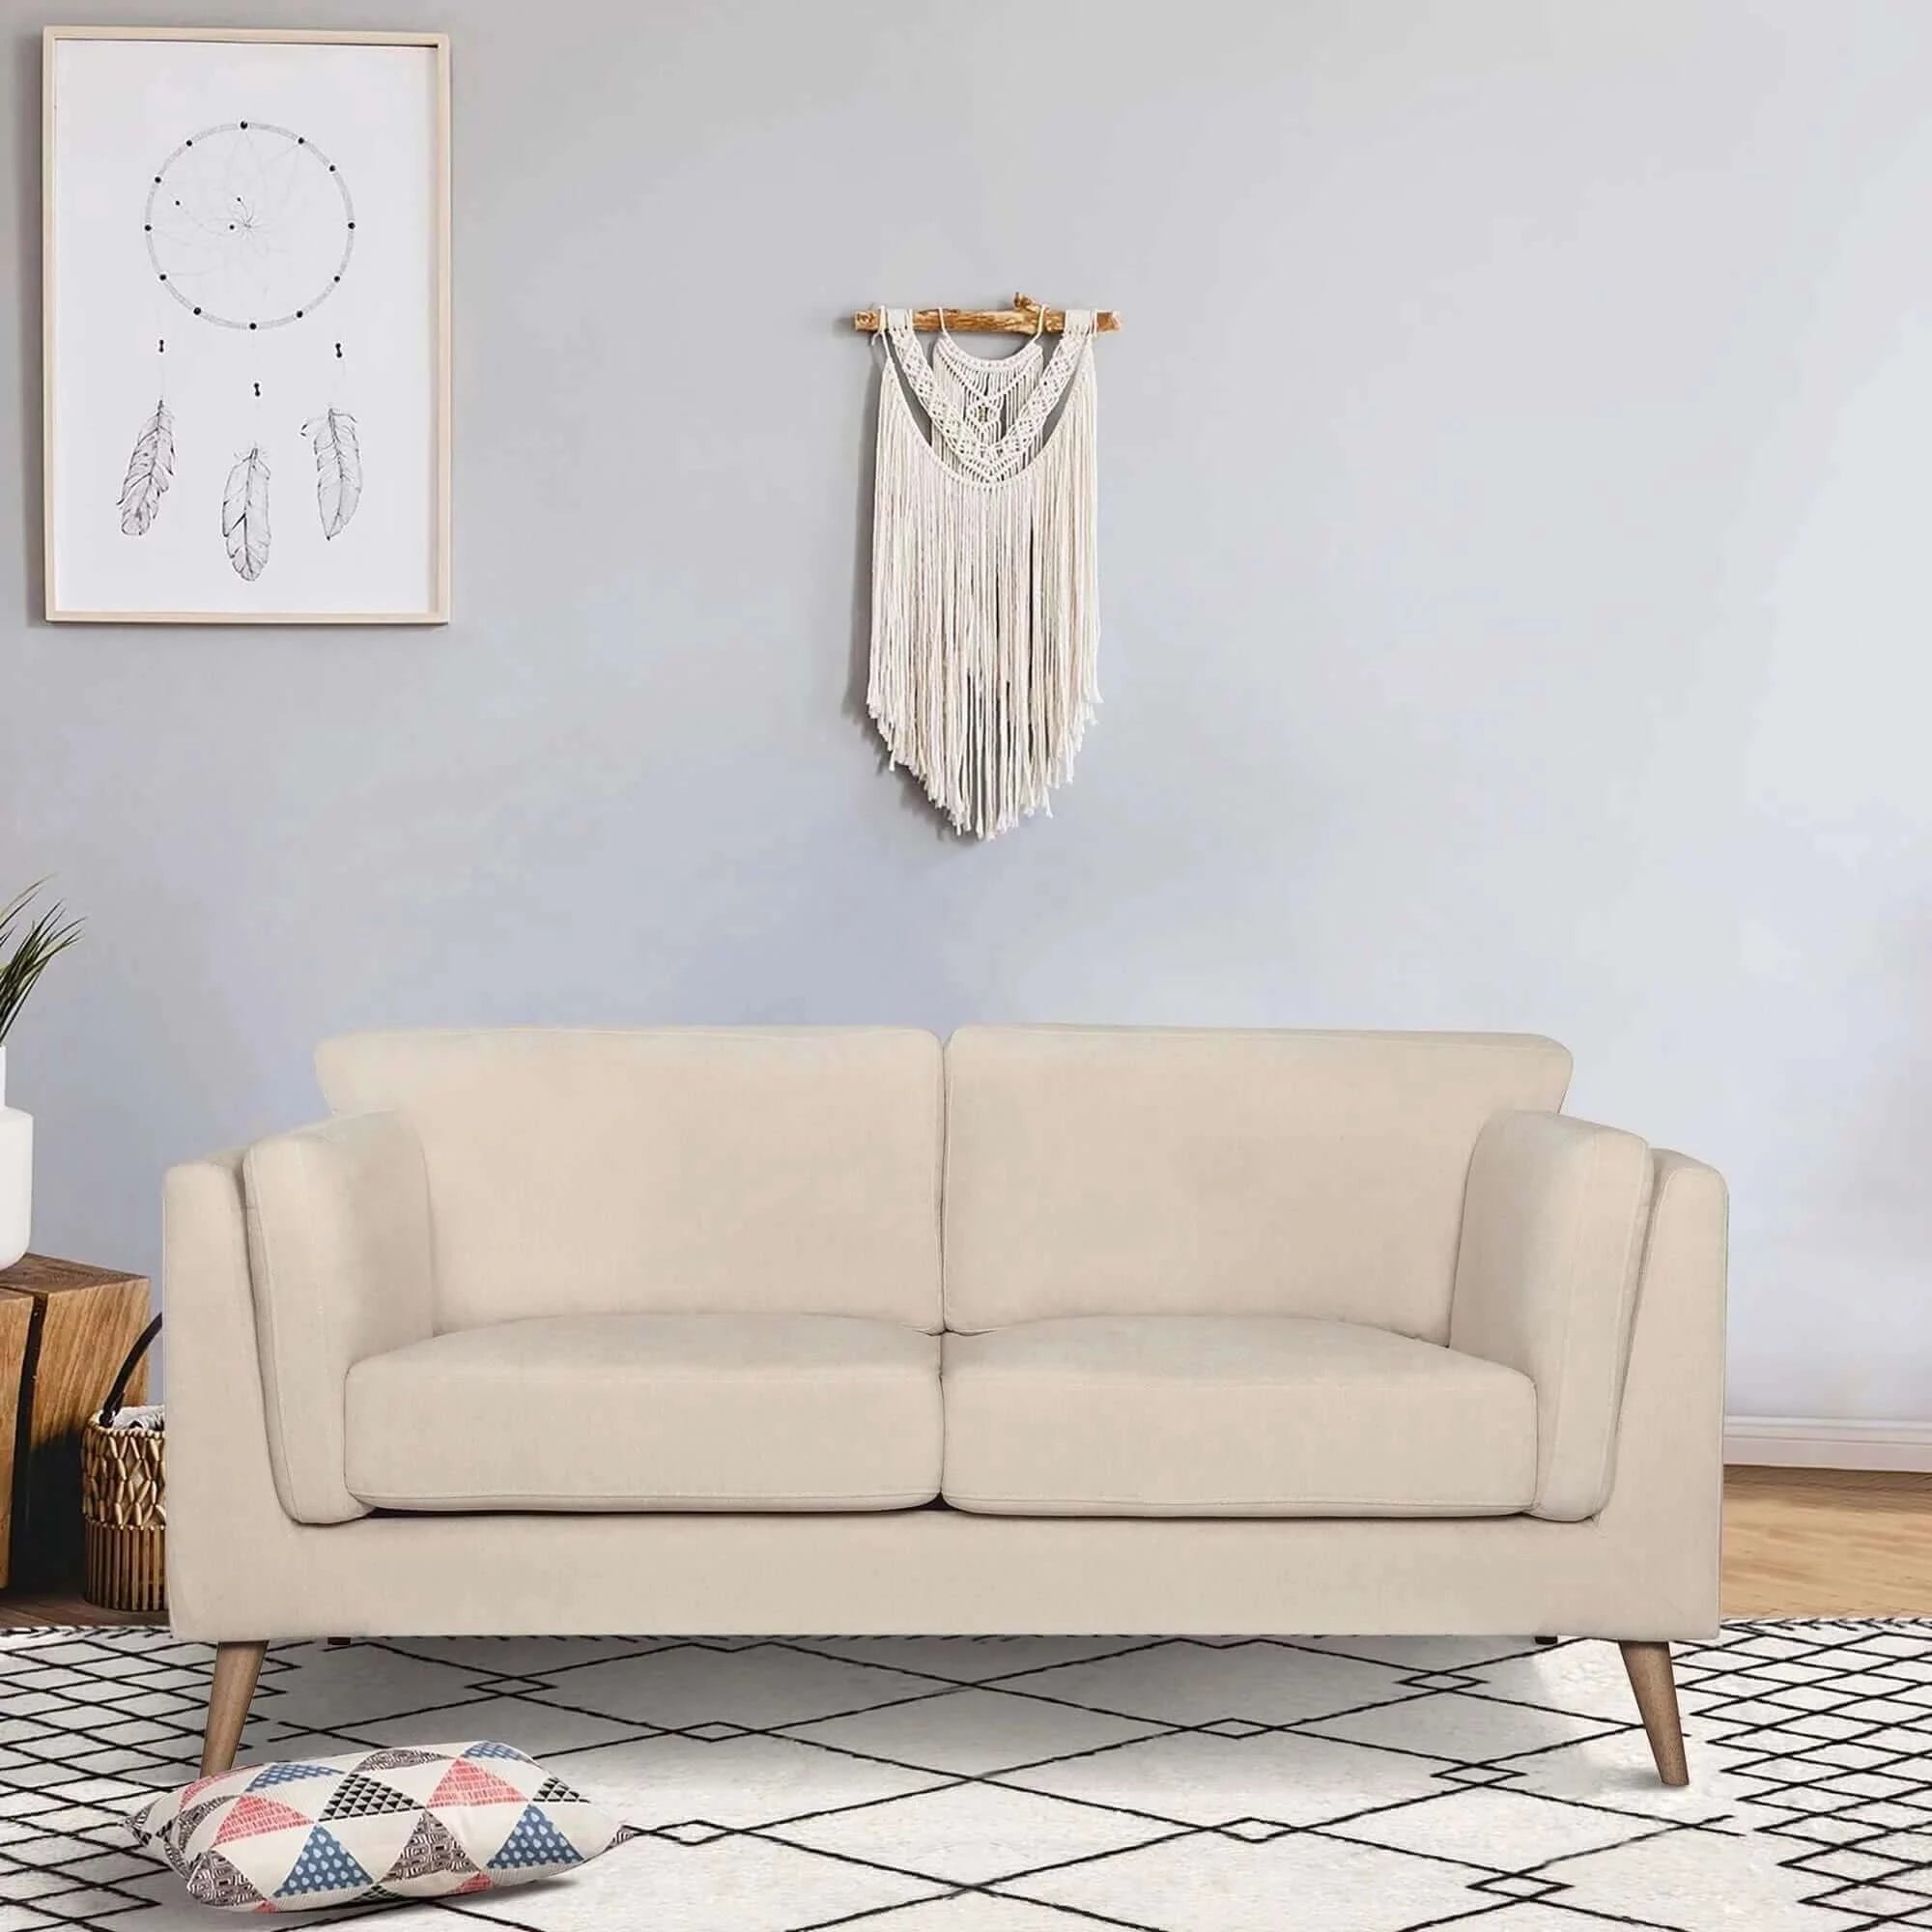 Buy nooa 2 + 3 seater sofa set fabric uplholstered lounge couch - stone - upinteriors-Upinteriors